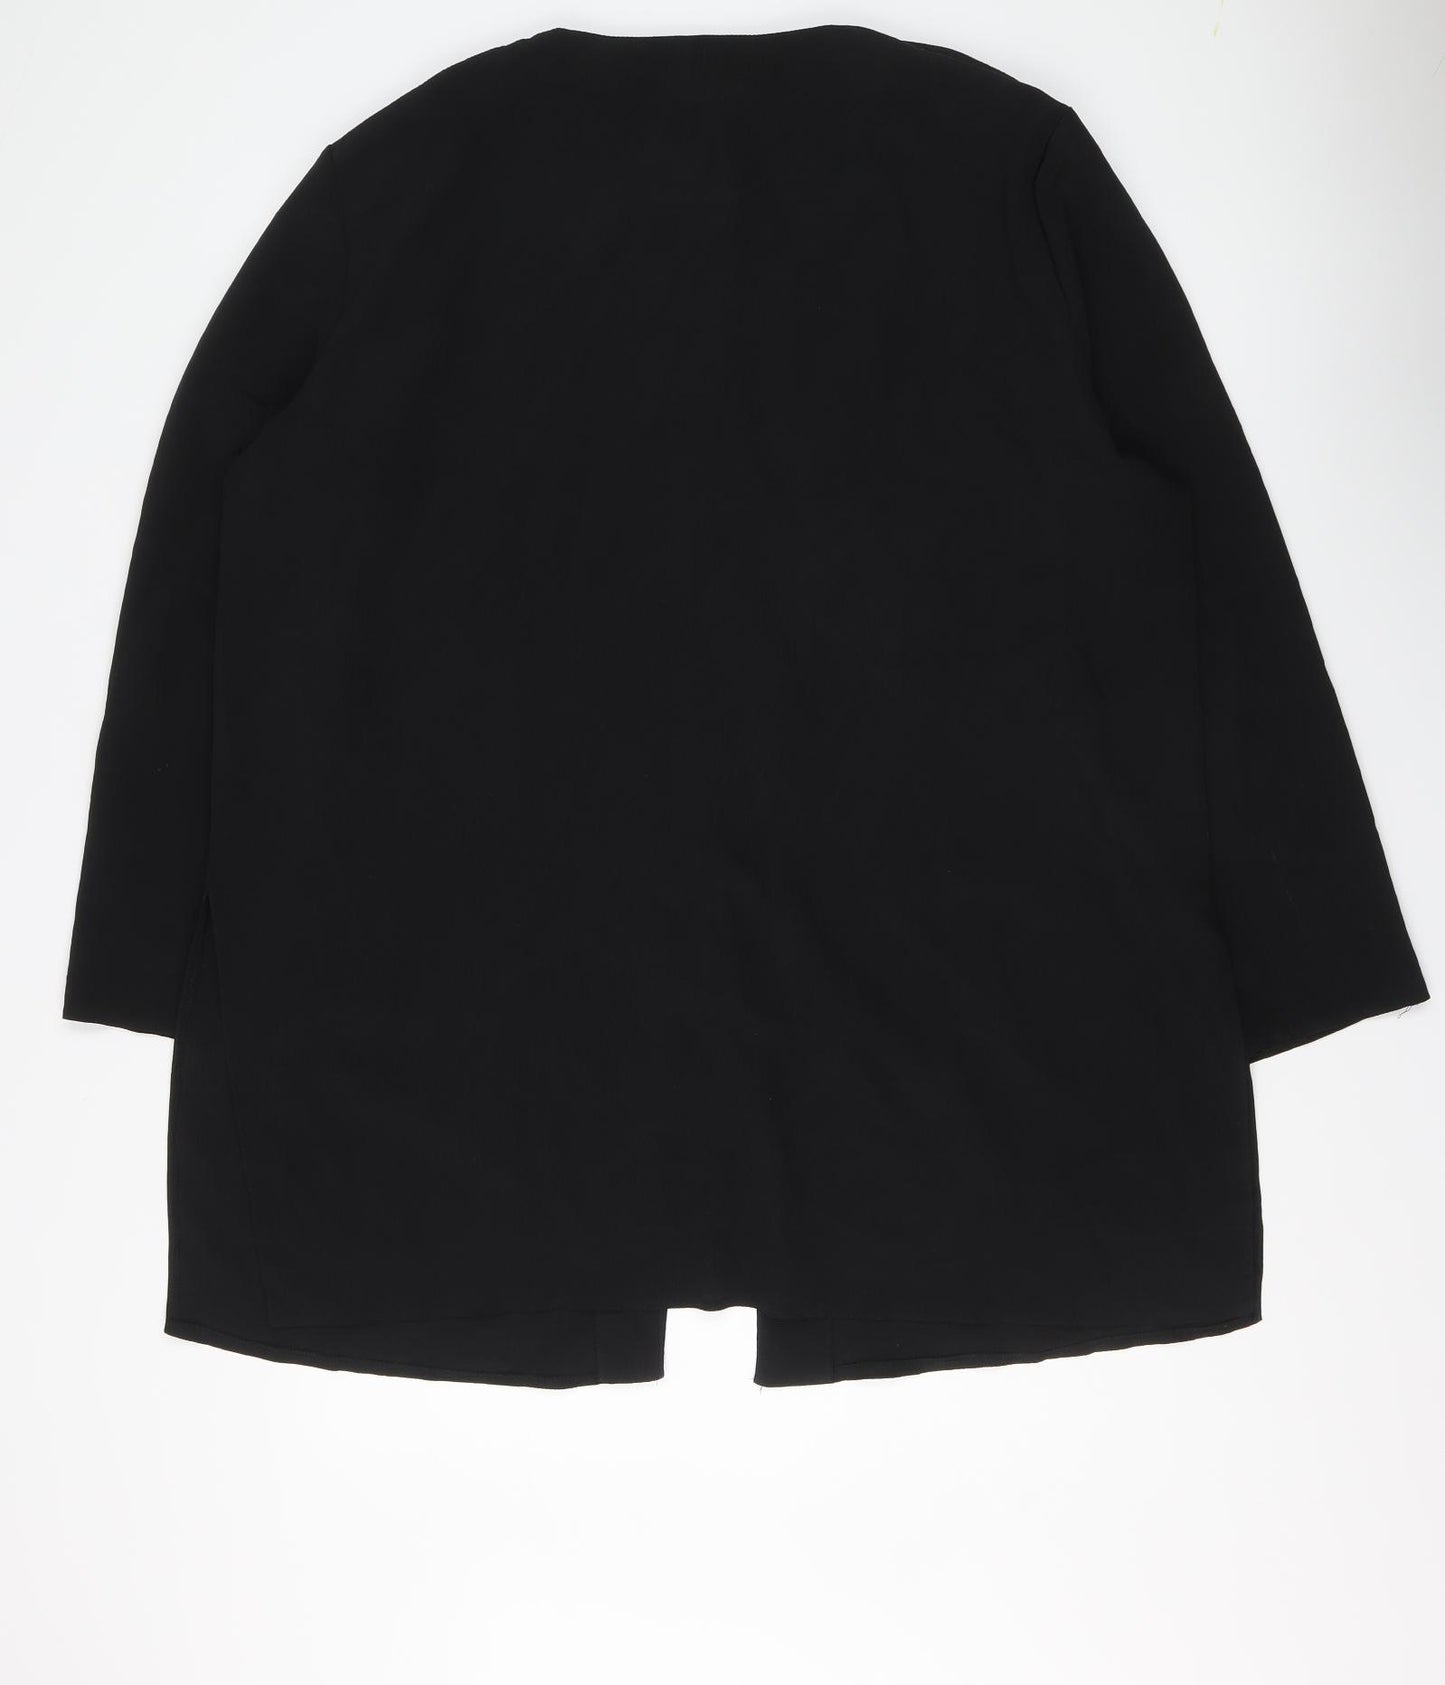 C&A Womens Black Jacket Size 20 Button